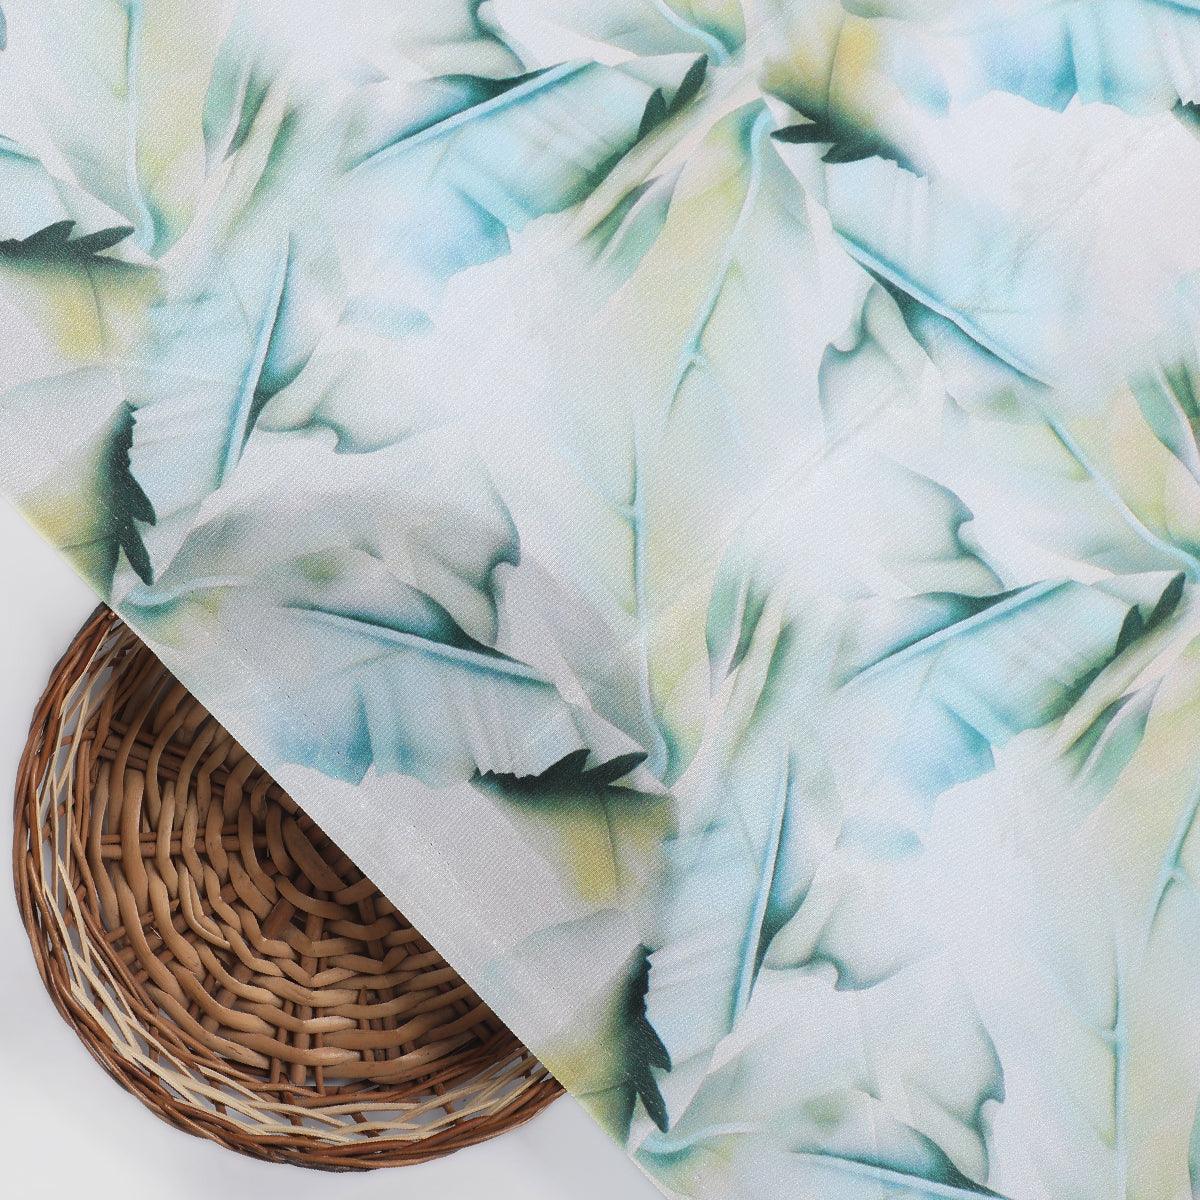 Cosmic Blue Leaves Printed Silk Crepe Fabric Material - FAB VOGUE Studio®